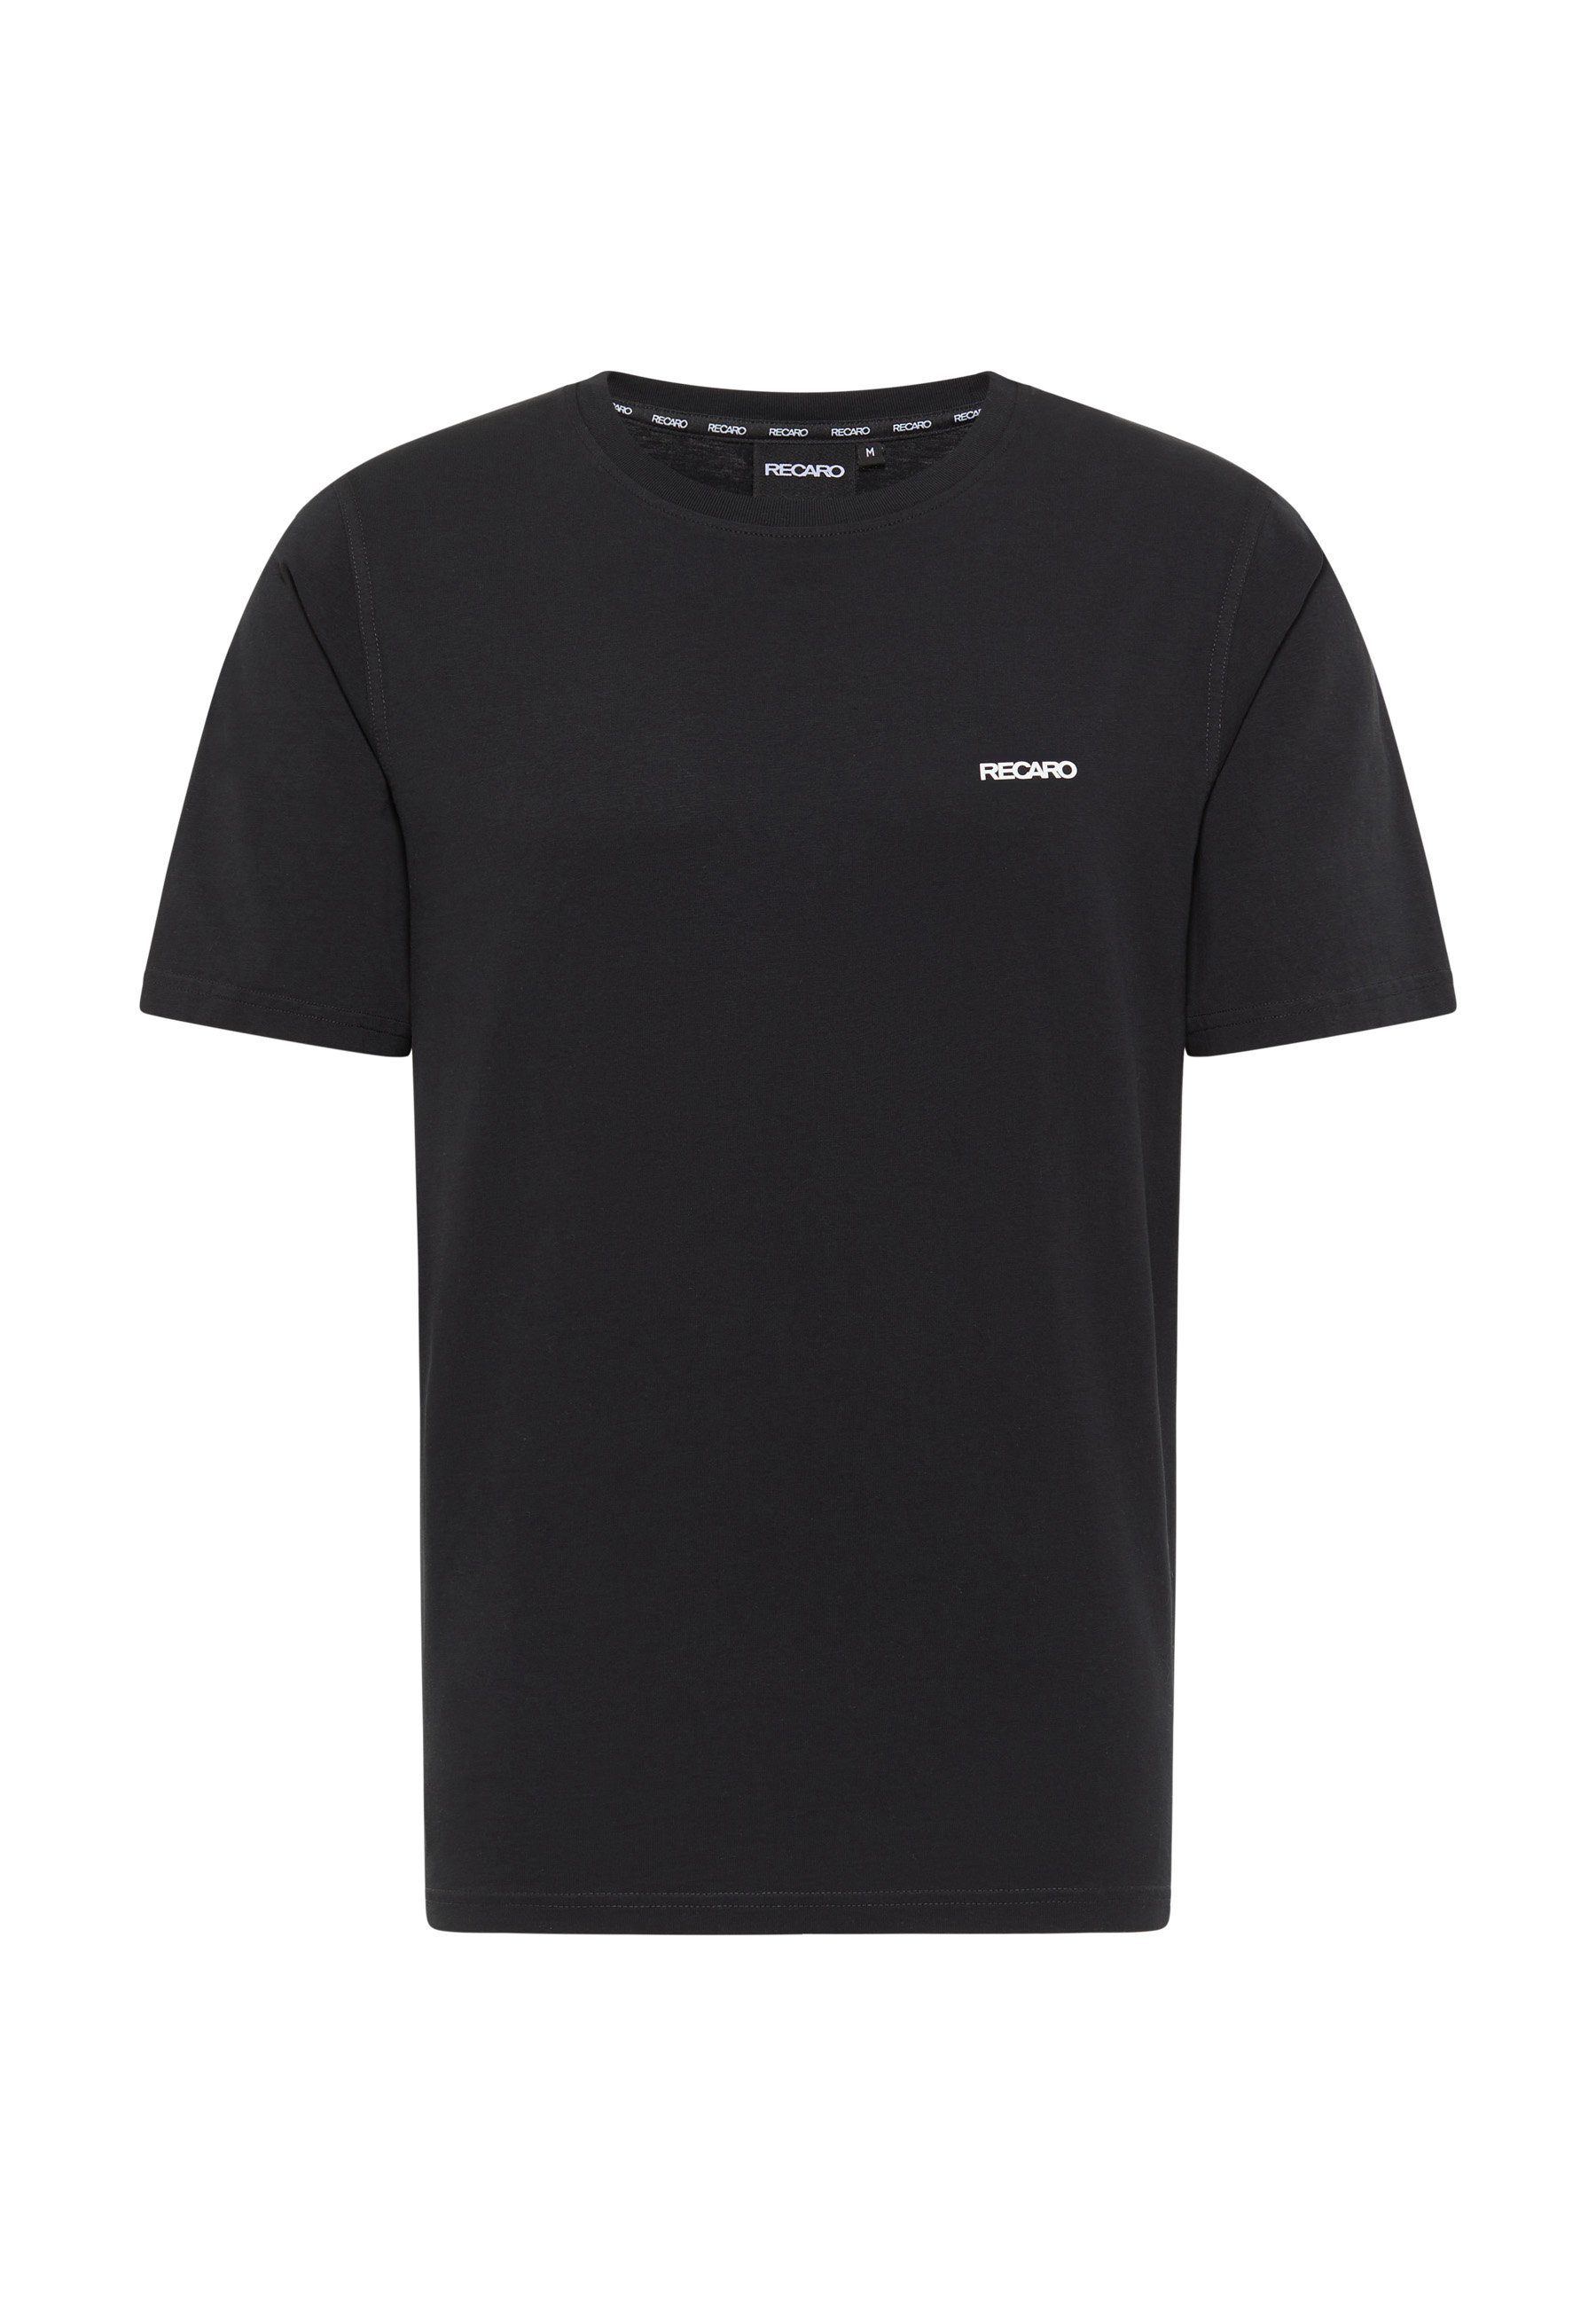 RECARO T-Shirt RECARO T-Shirt Originals Basic, Herren Shirt, Rundhals, 100% Baumwolle, Made in Europe